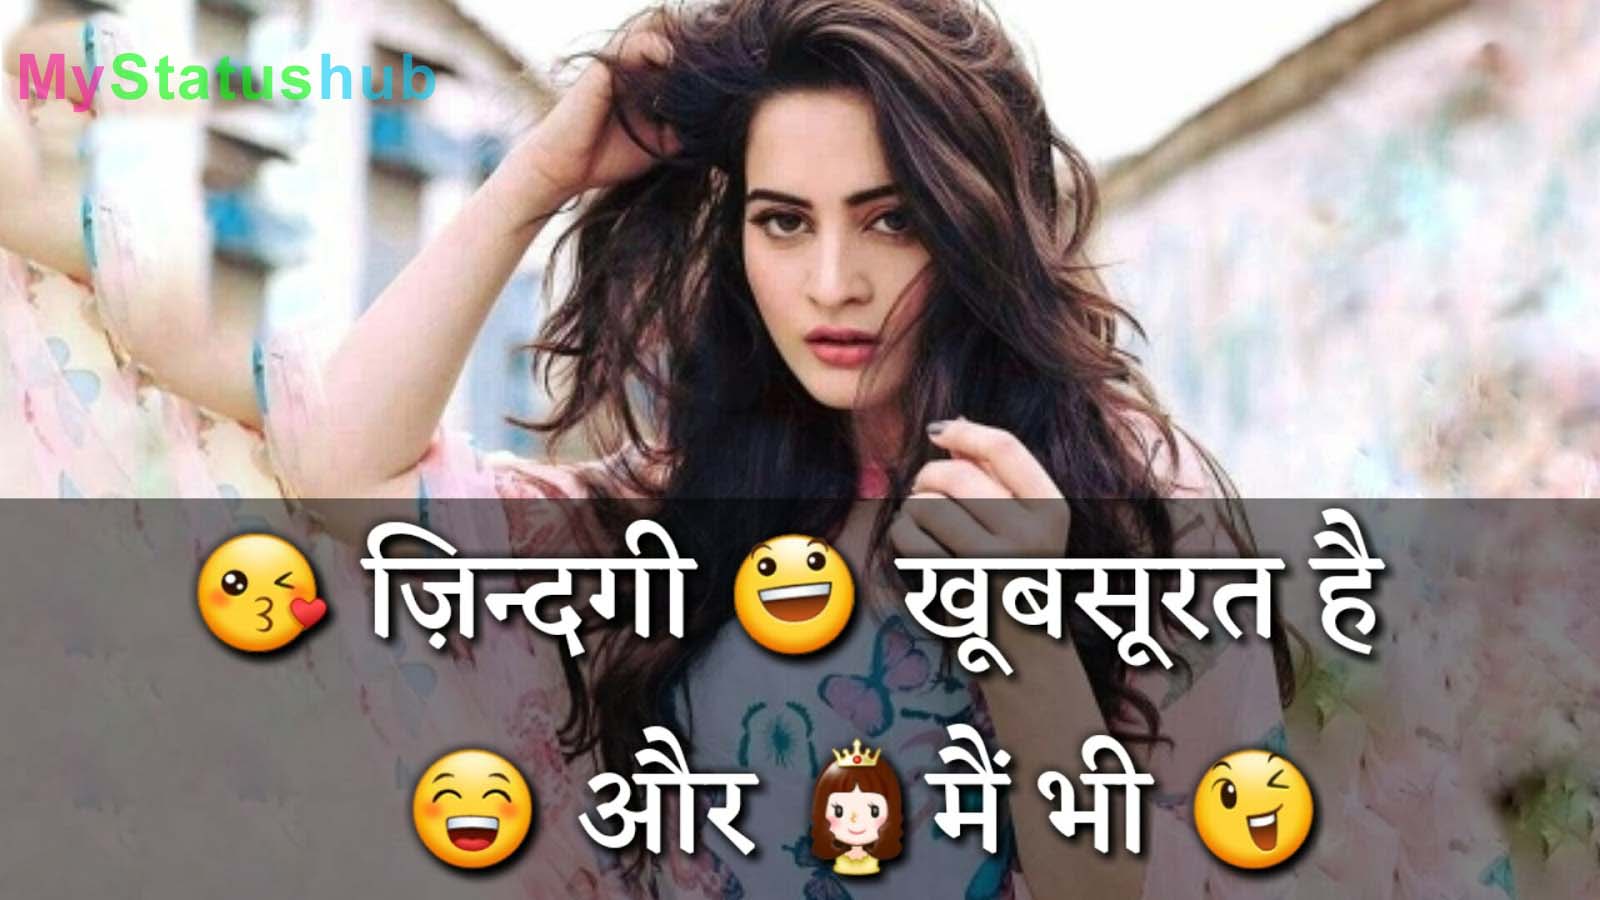 Hindi attitude status for girls